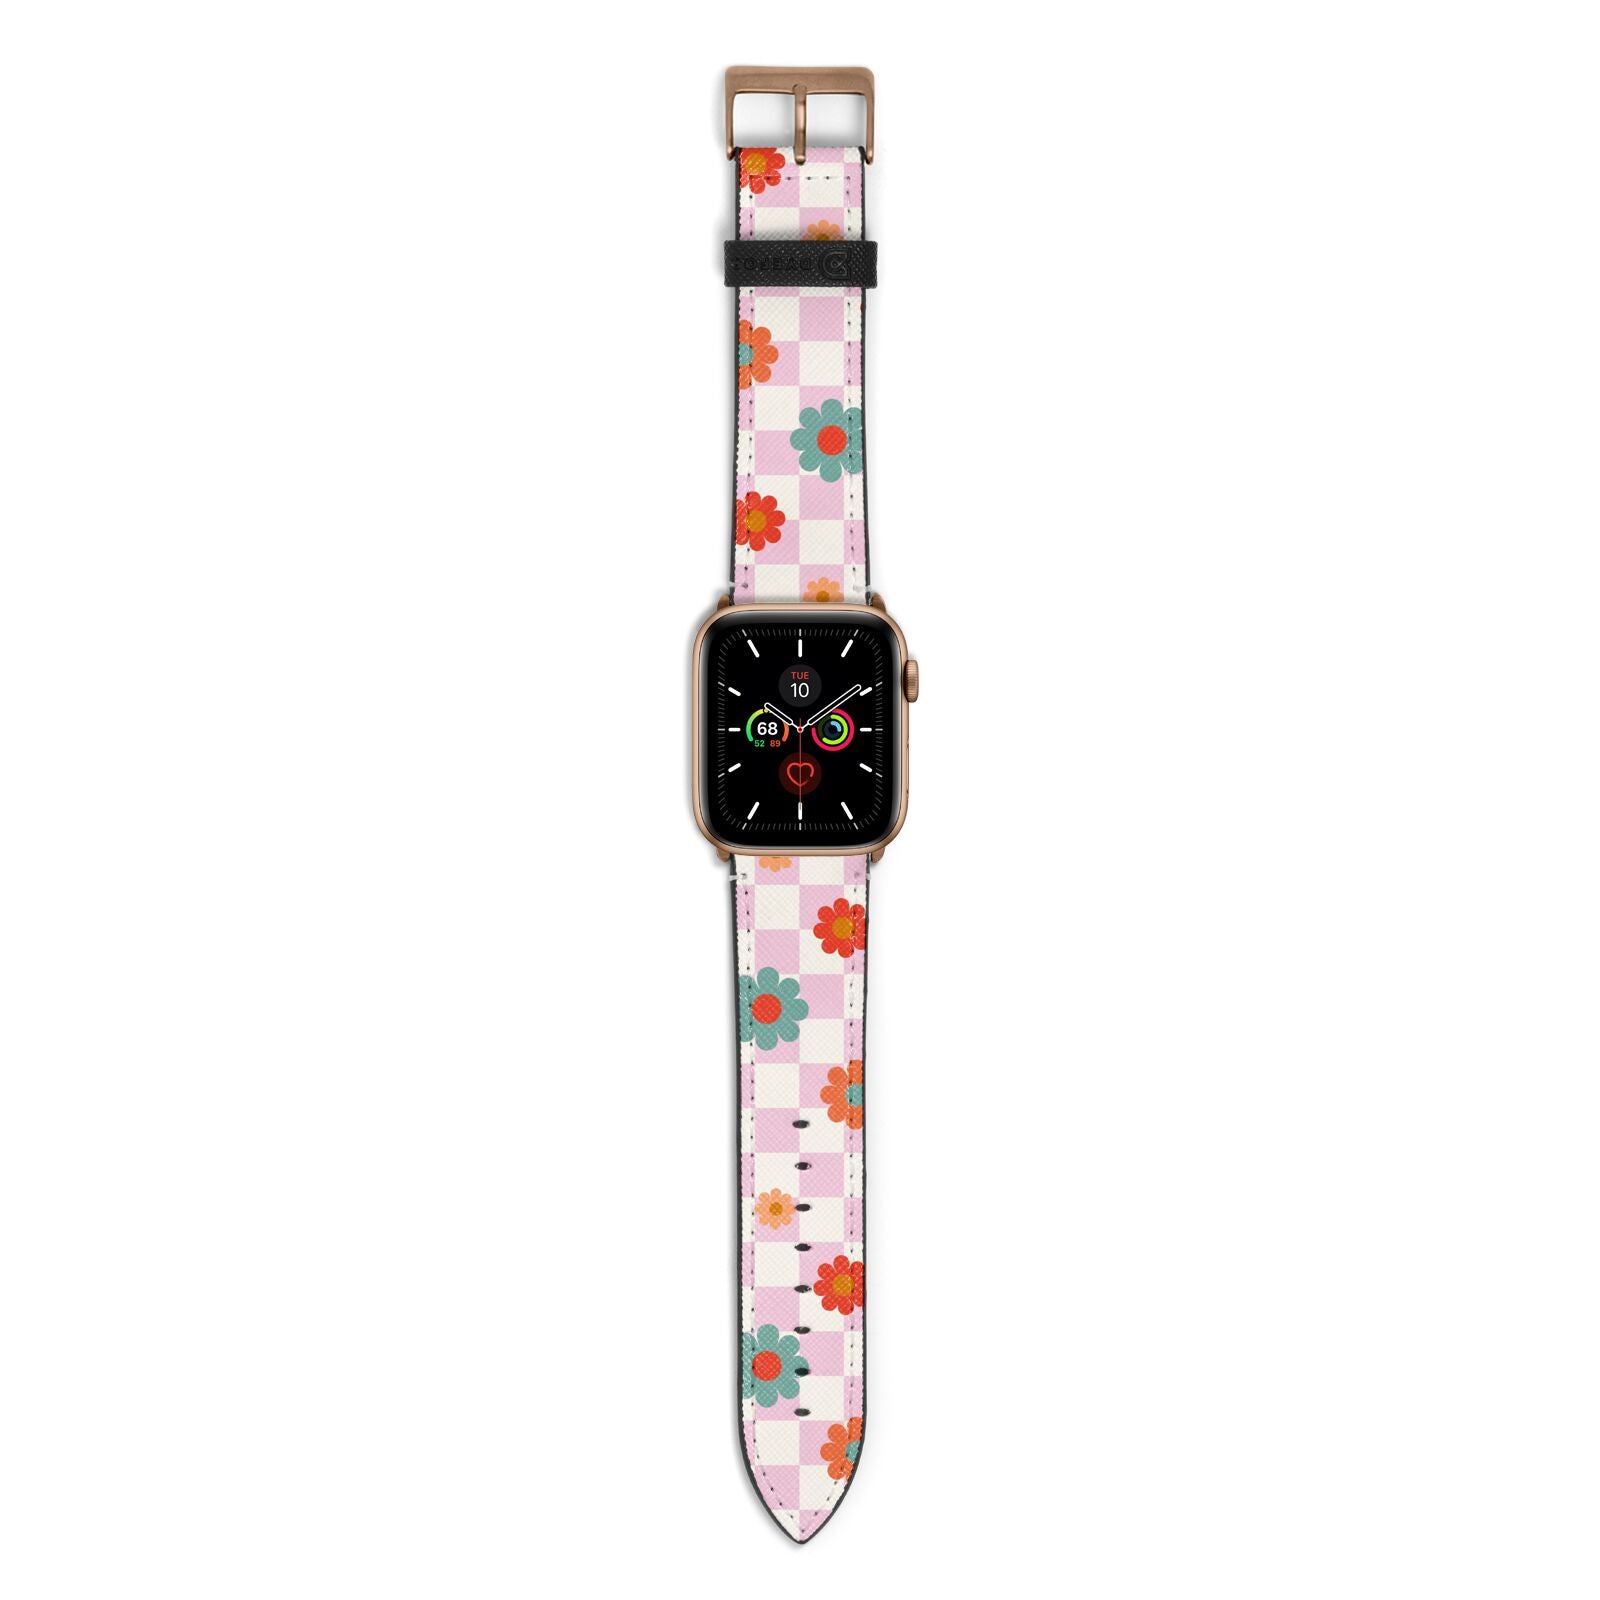 Flower Power Apple Watch Strap with Gold Hardware